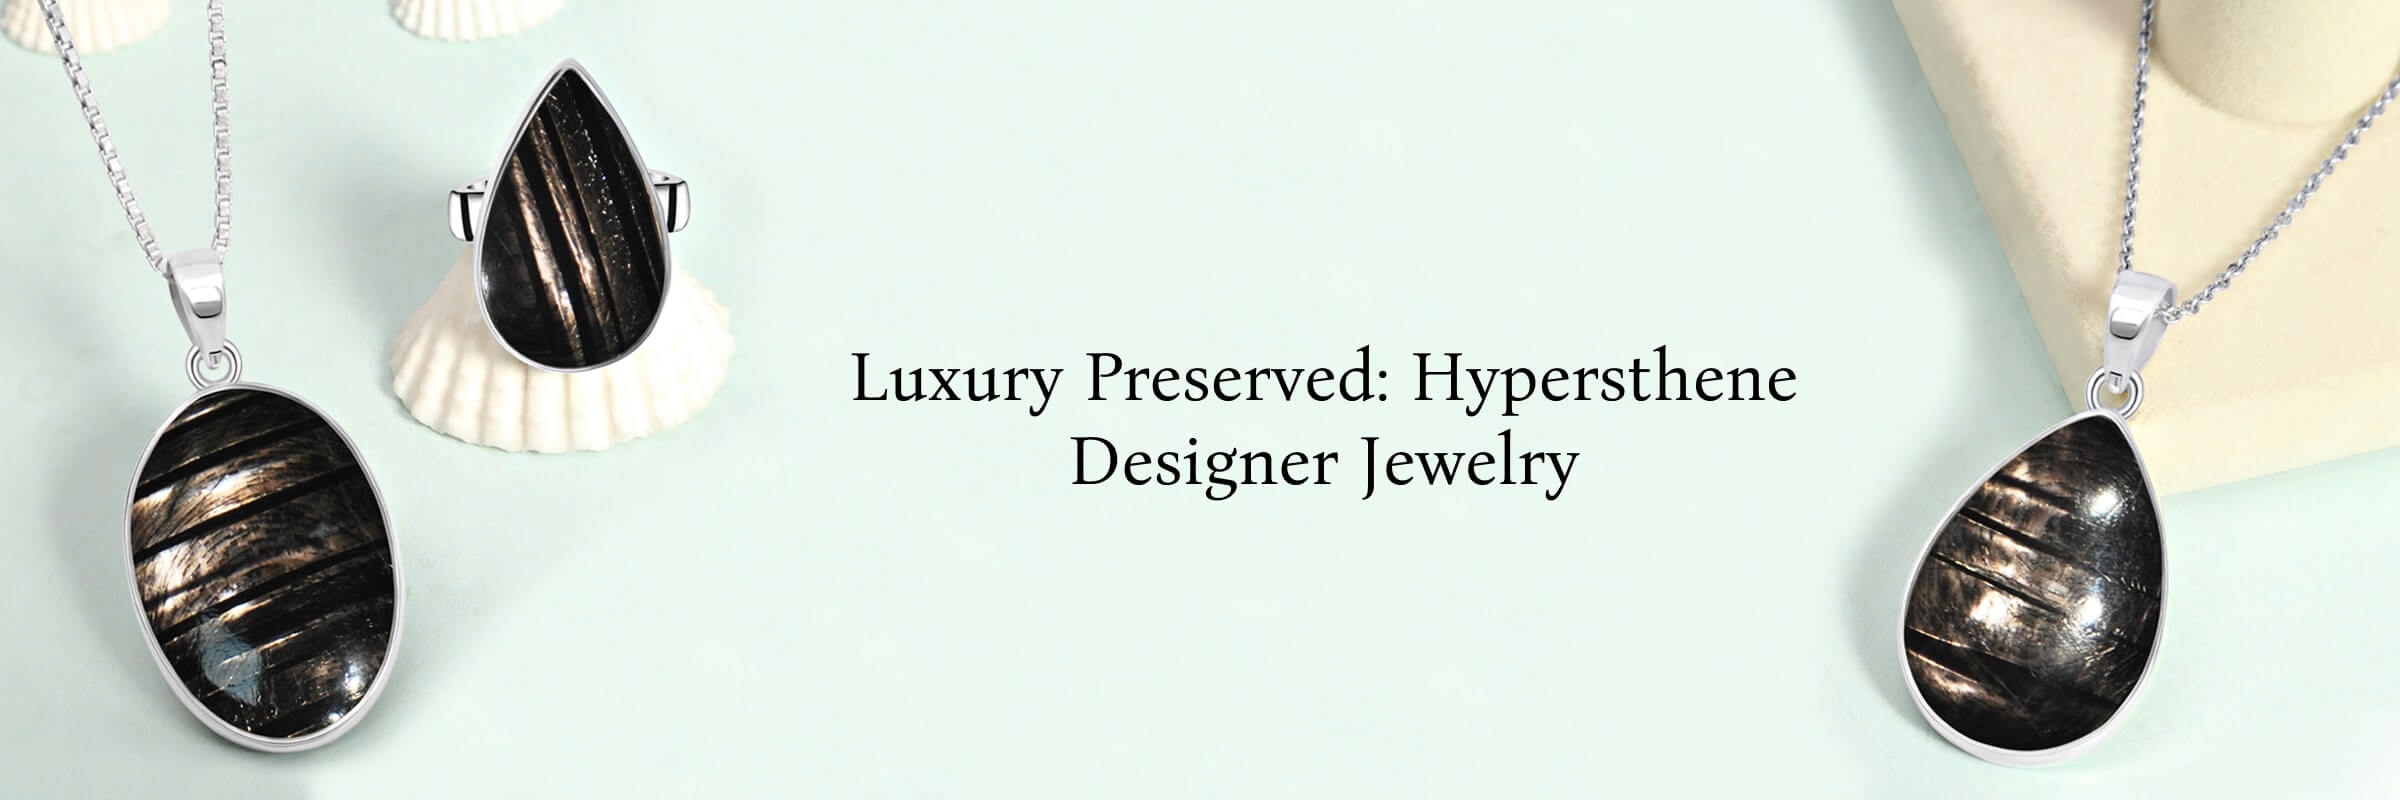 Care of Hypersthene Designer Jewelry